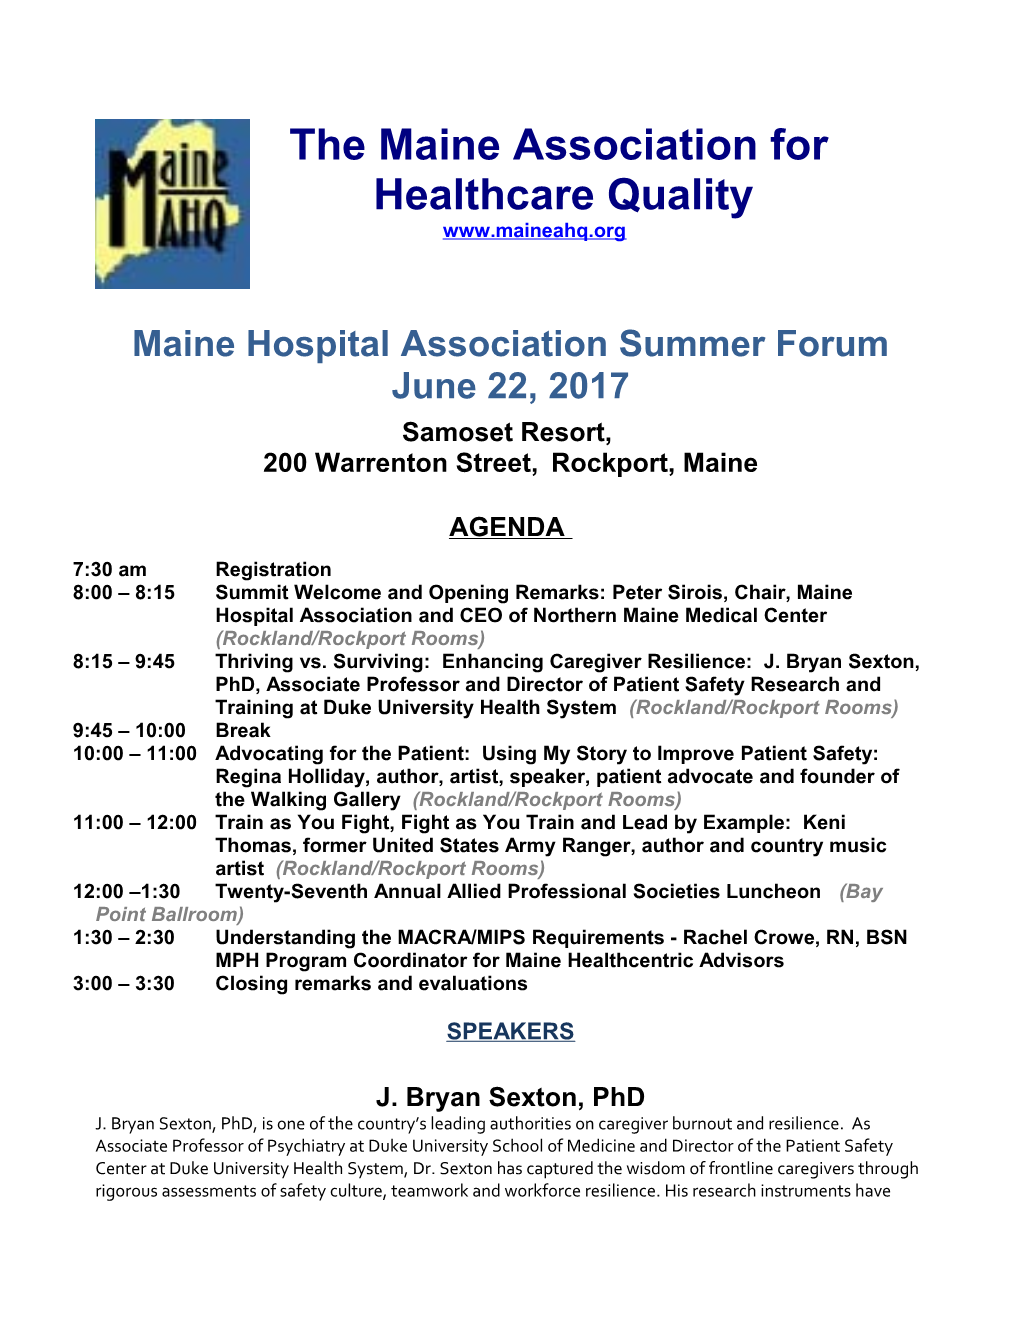 The Maine Association for Healthcare Quality